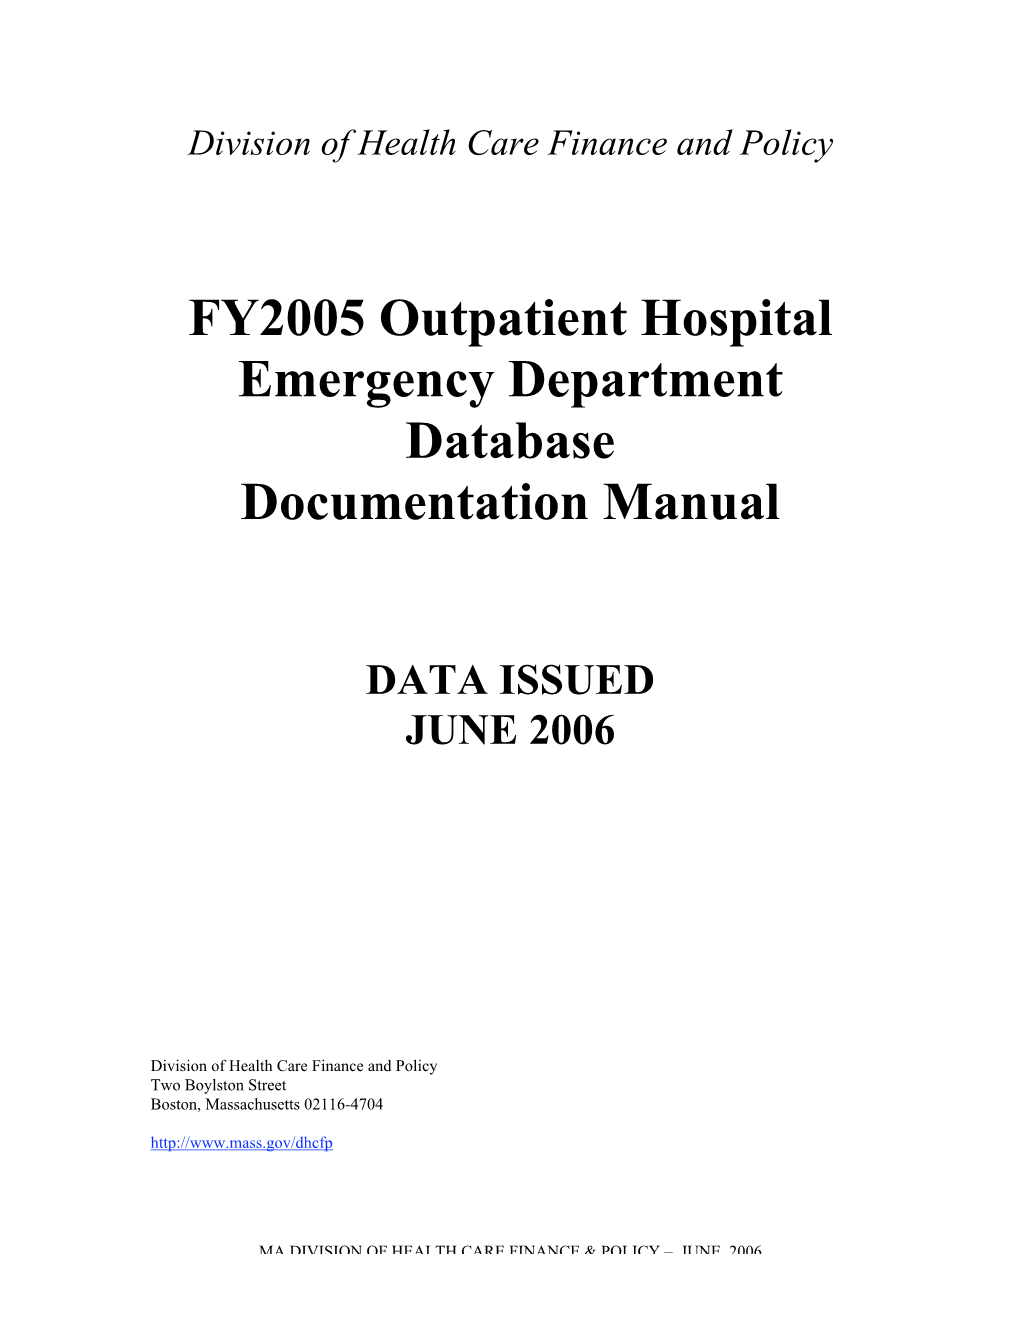 FY2005 Outpatient Hospital Emergency Department Database Documentation Manual